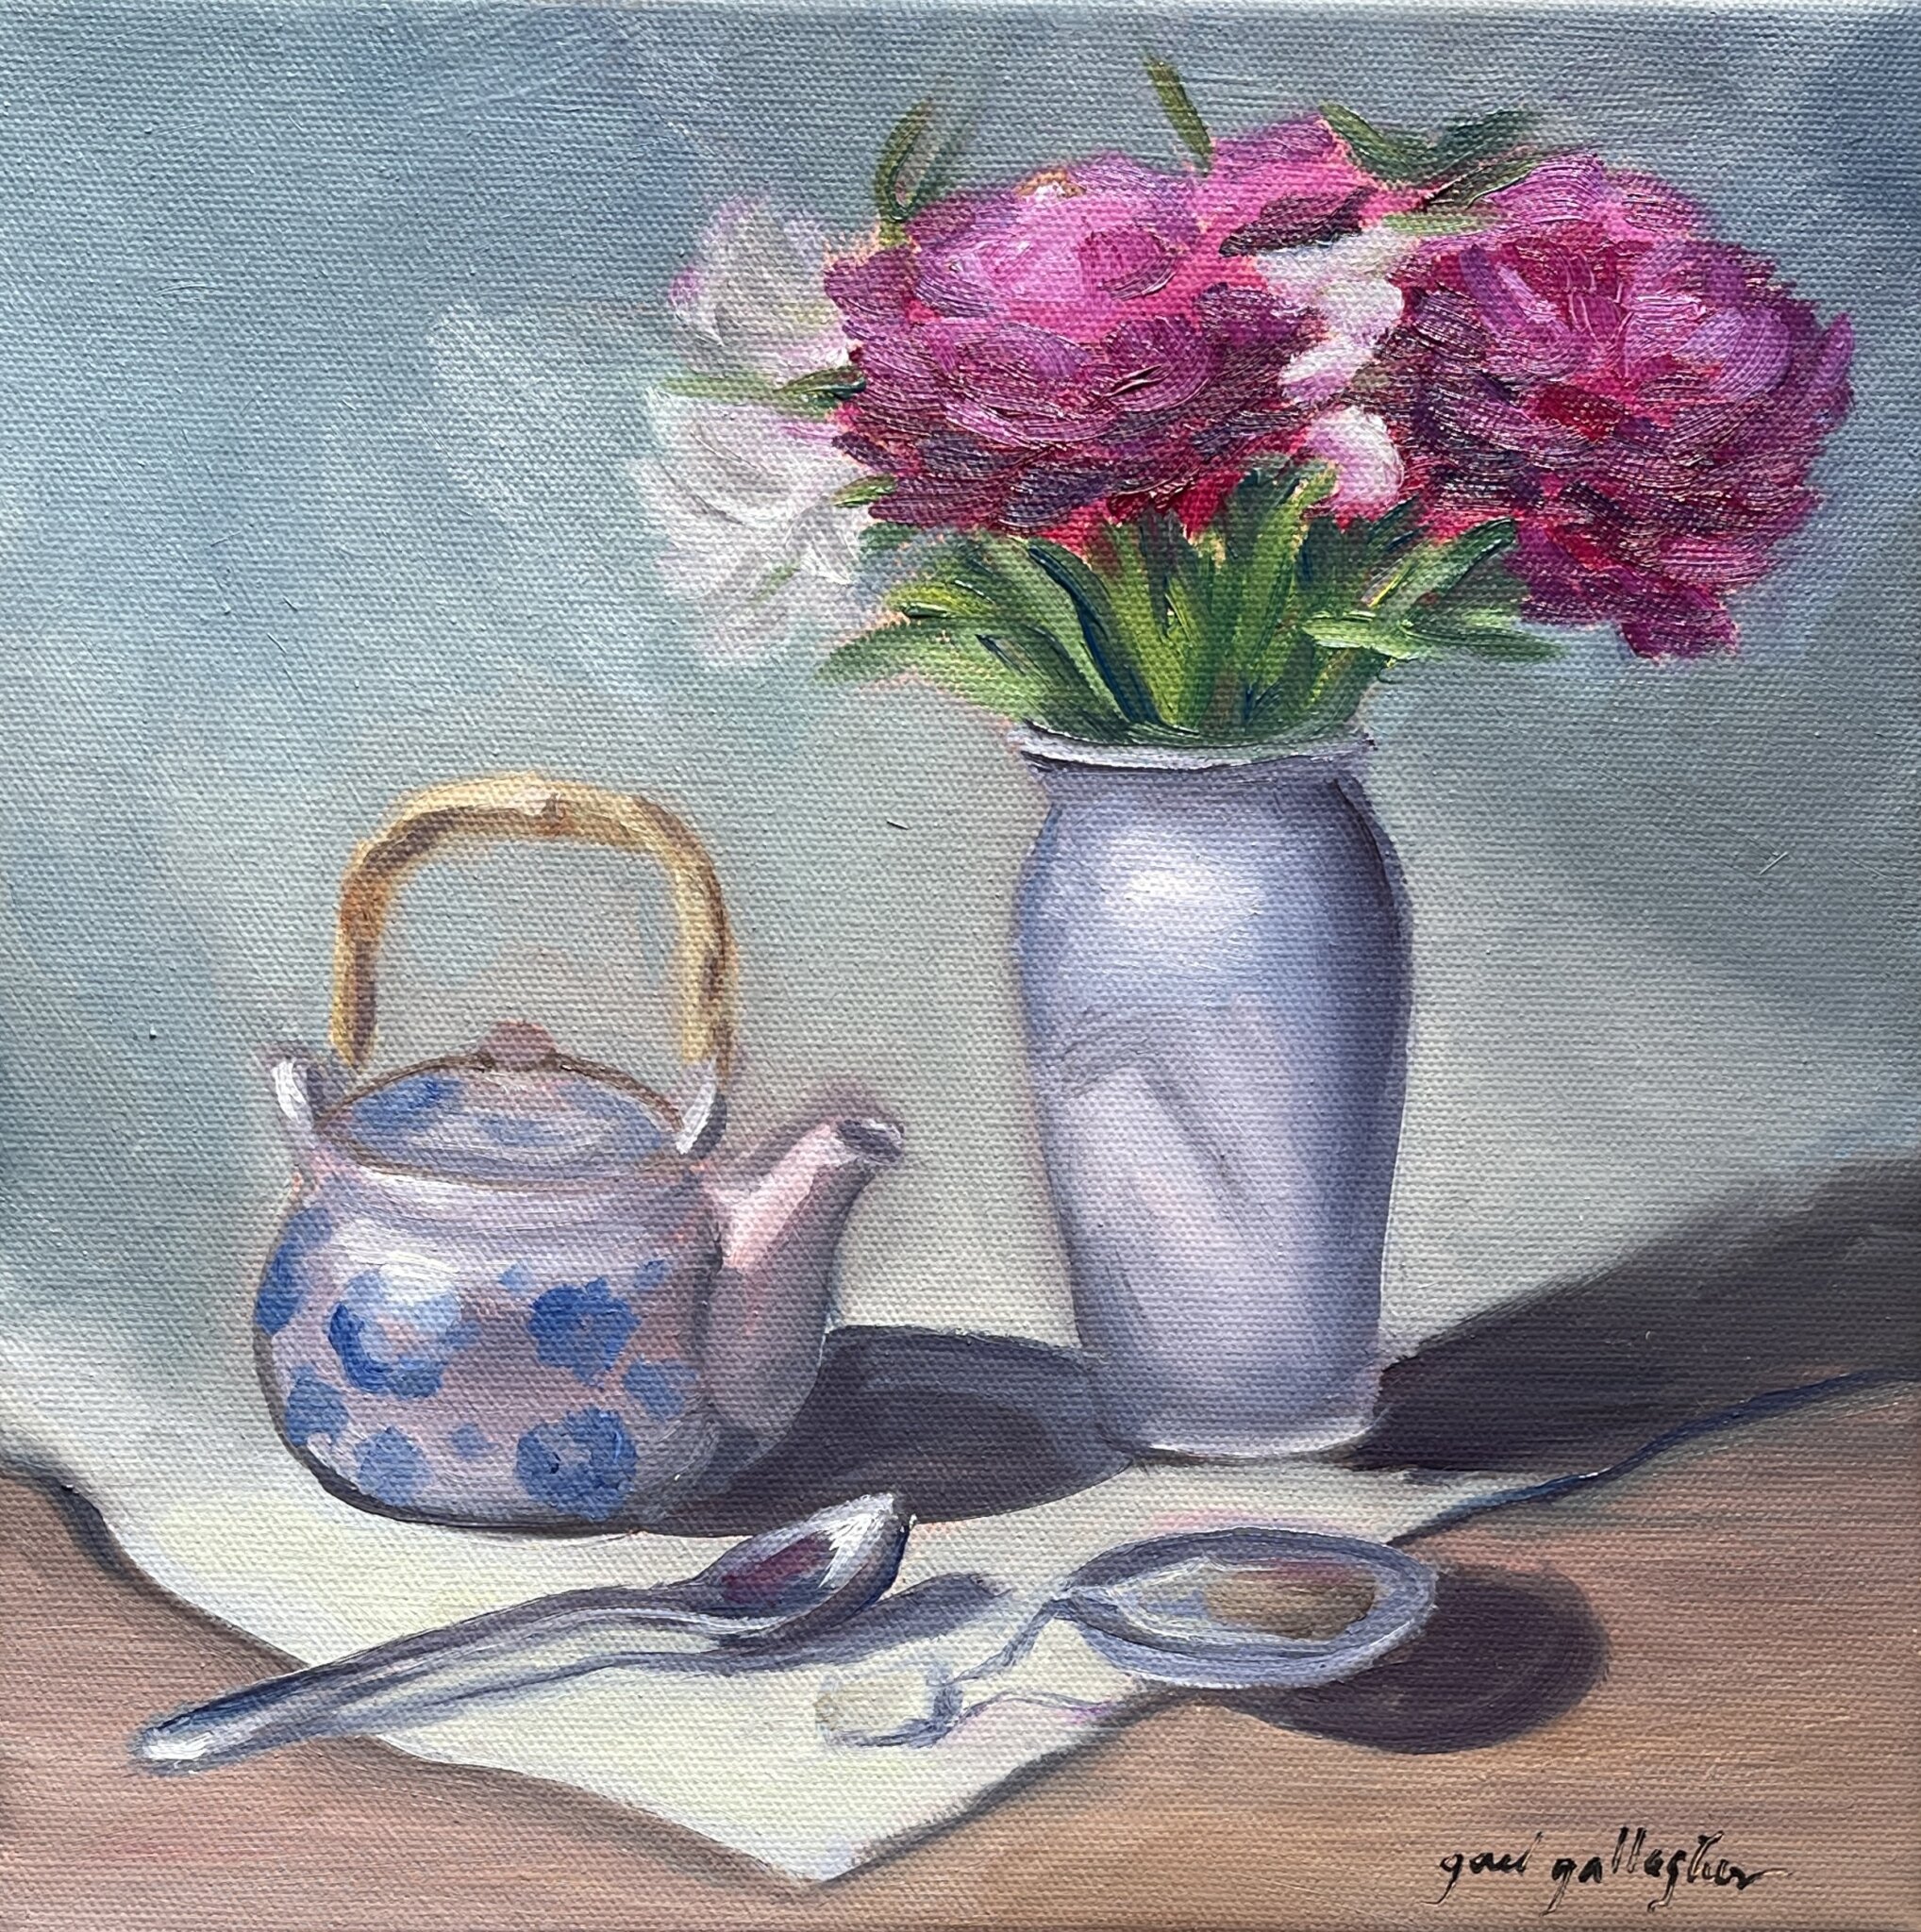 Gail Gallagher's "Tea-ony"